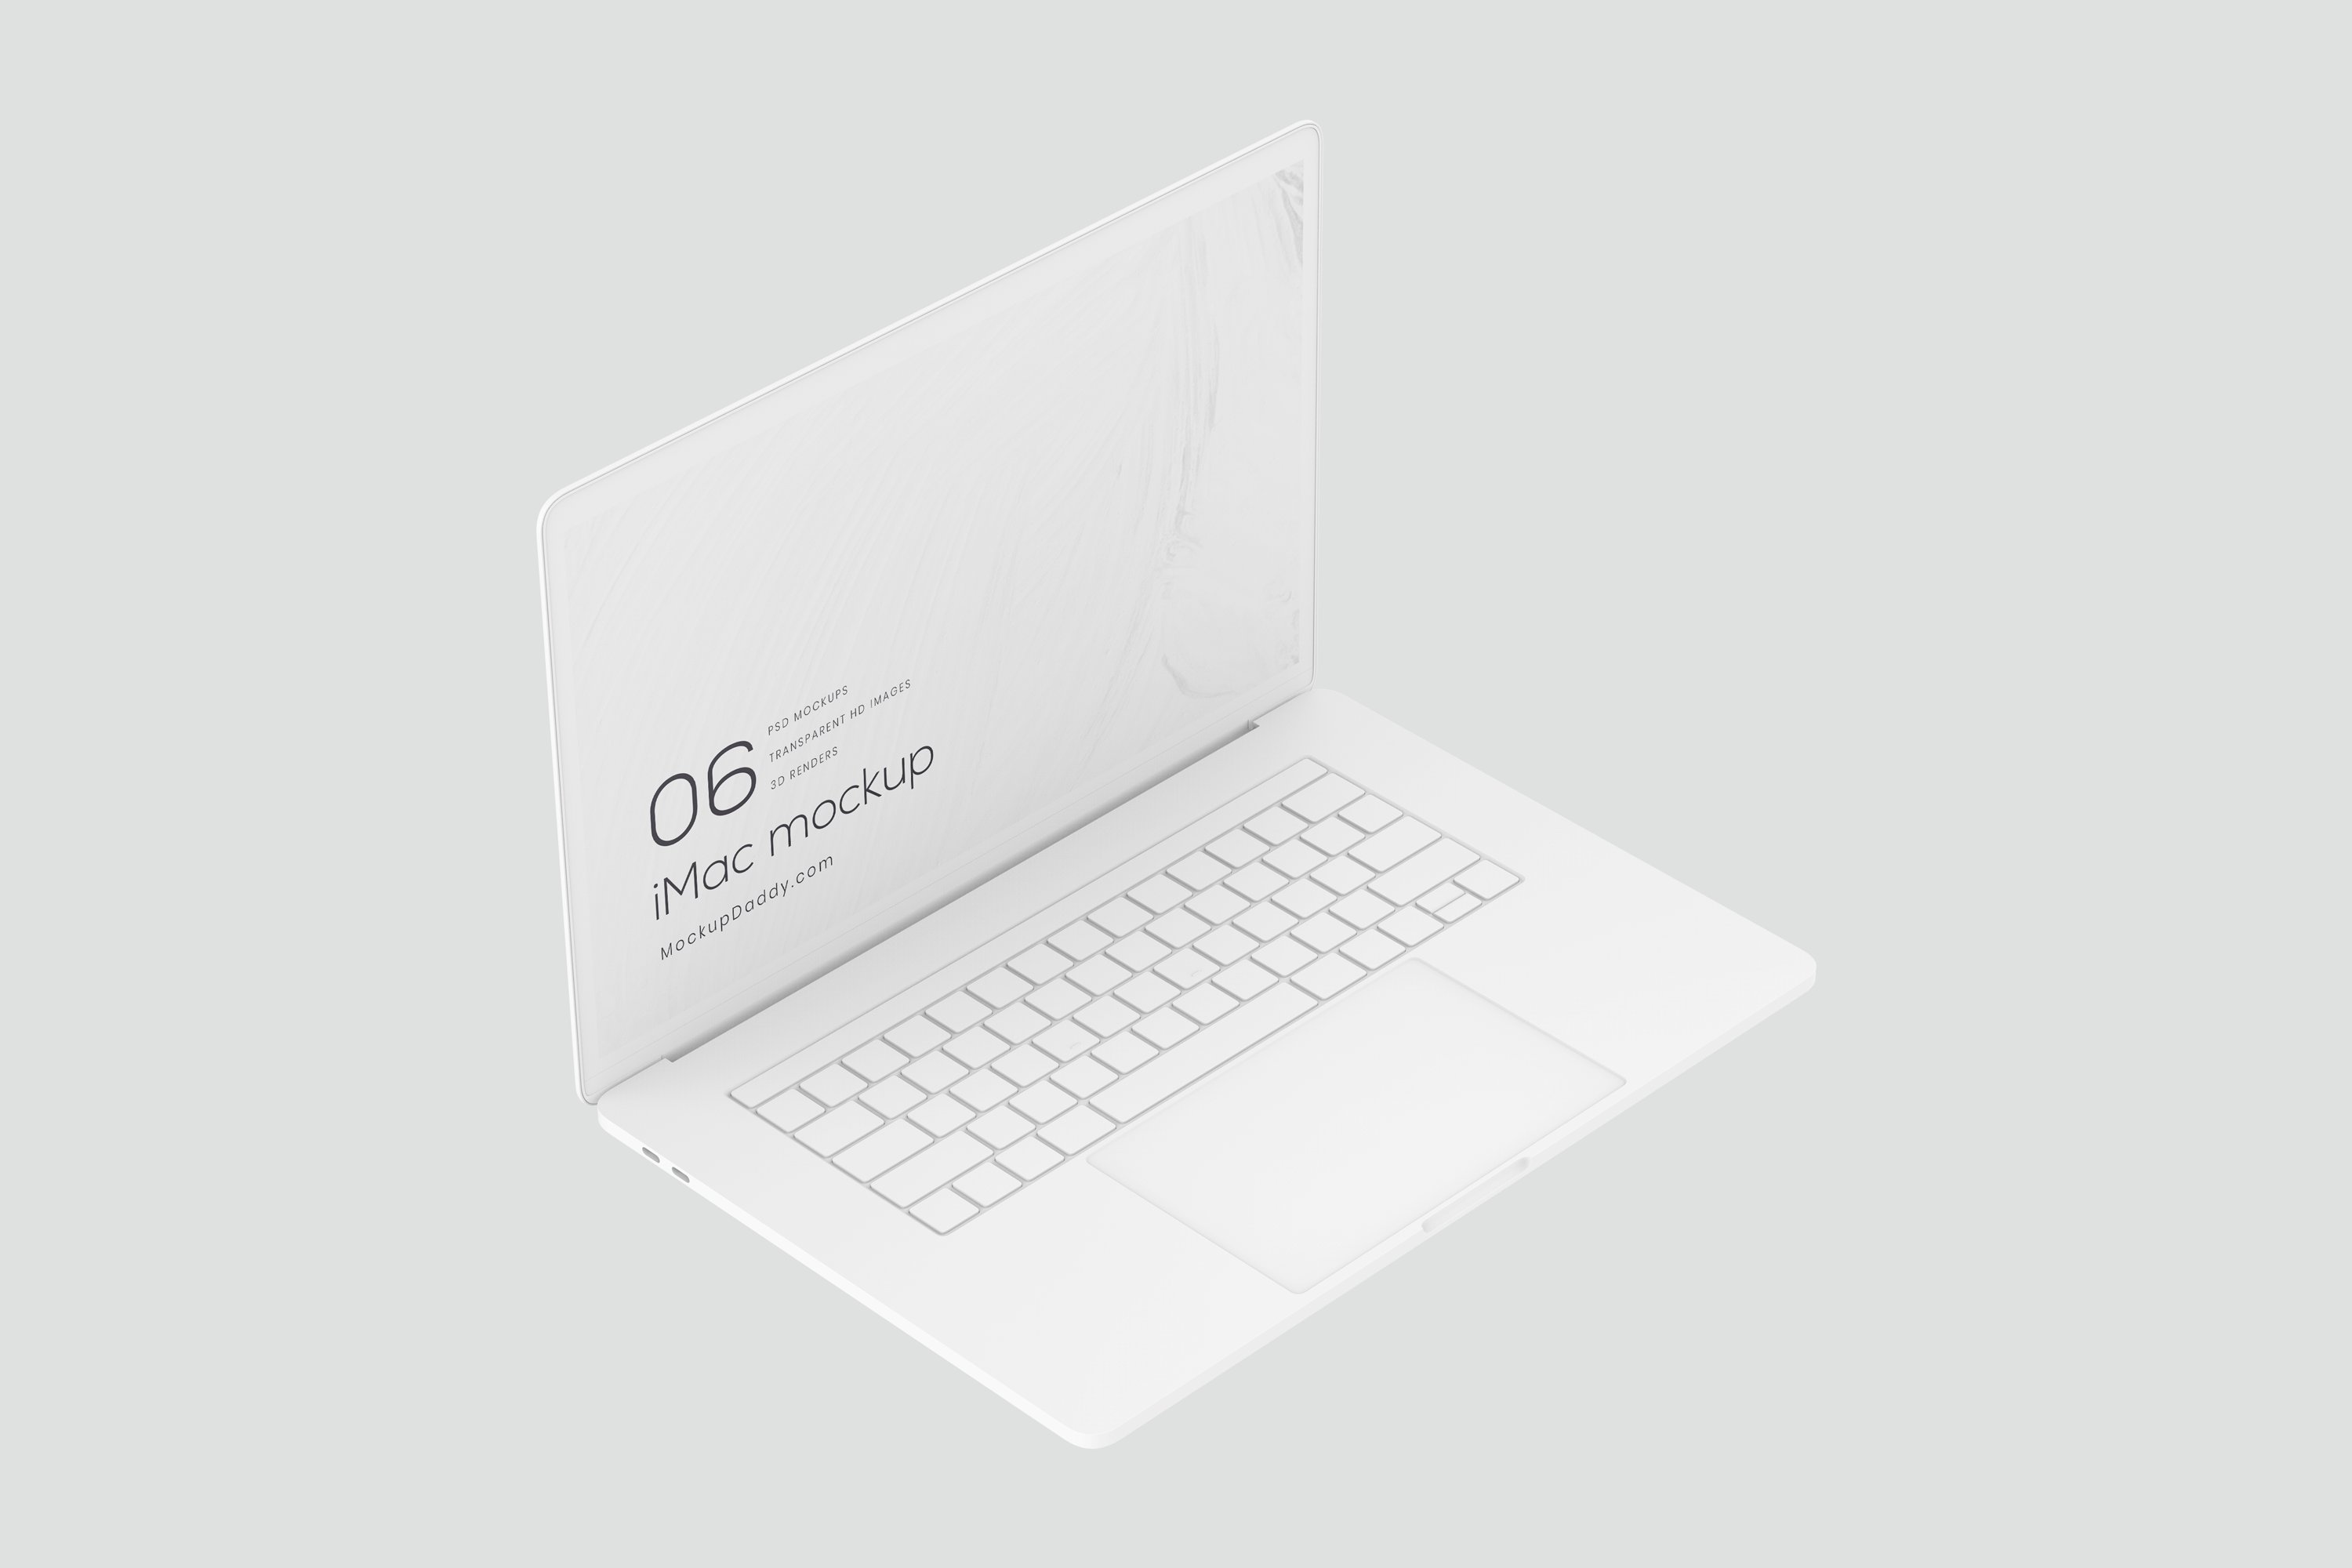 macbook pro 15 inch white mockup 02 428